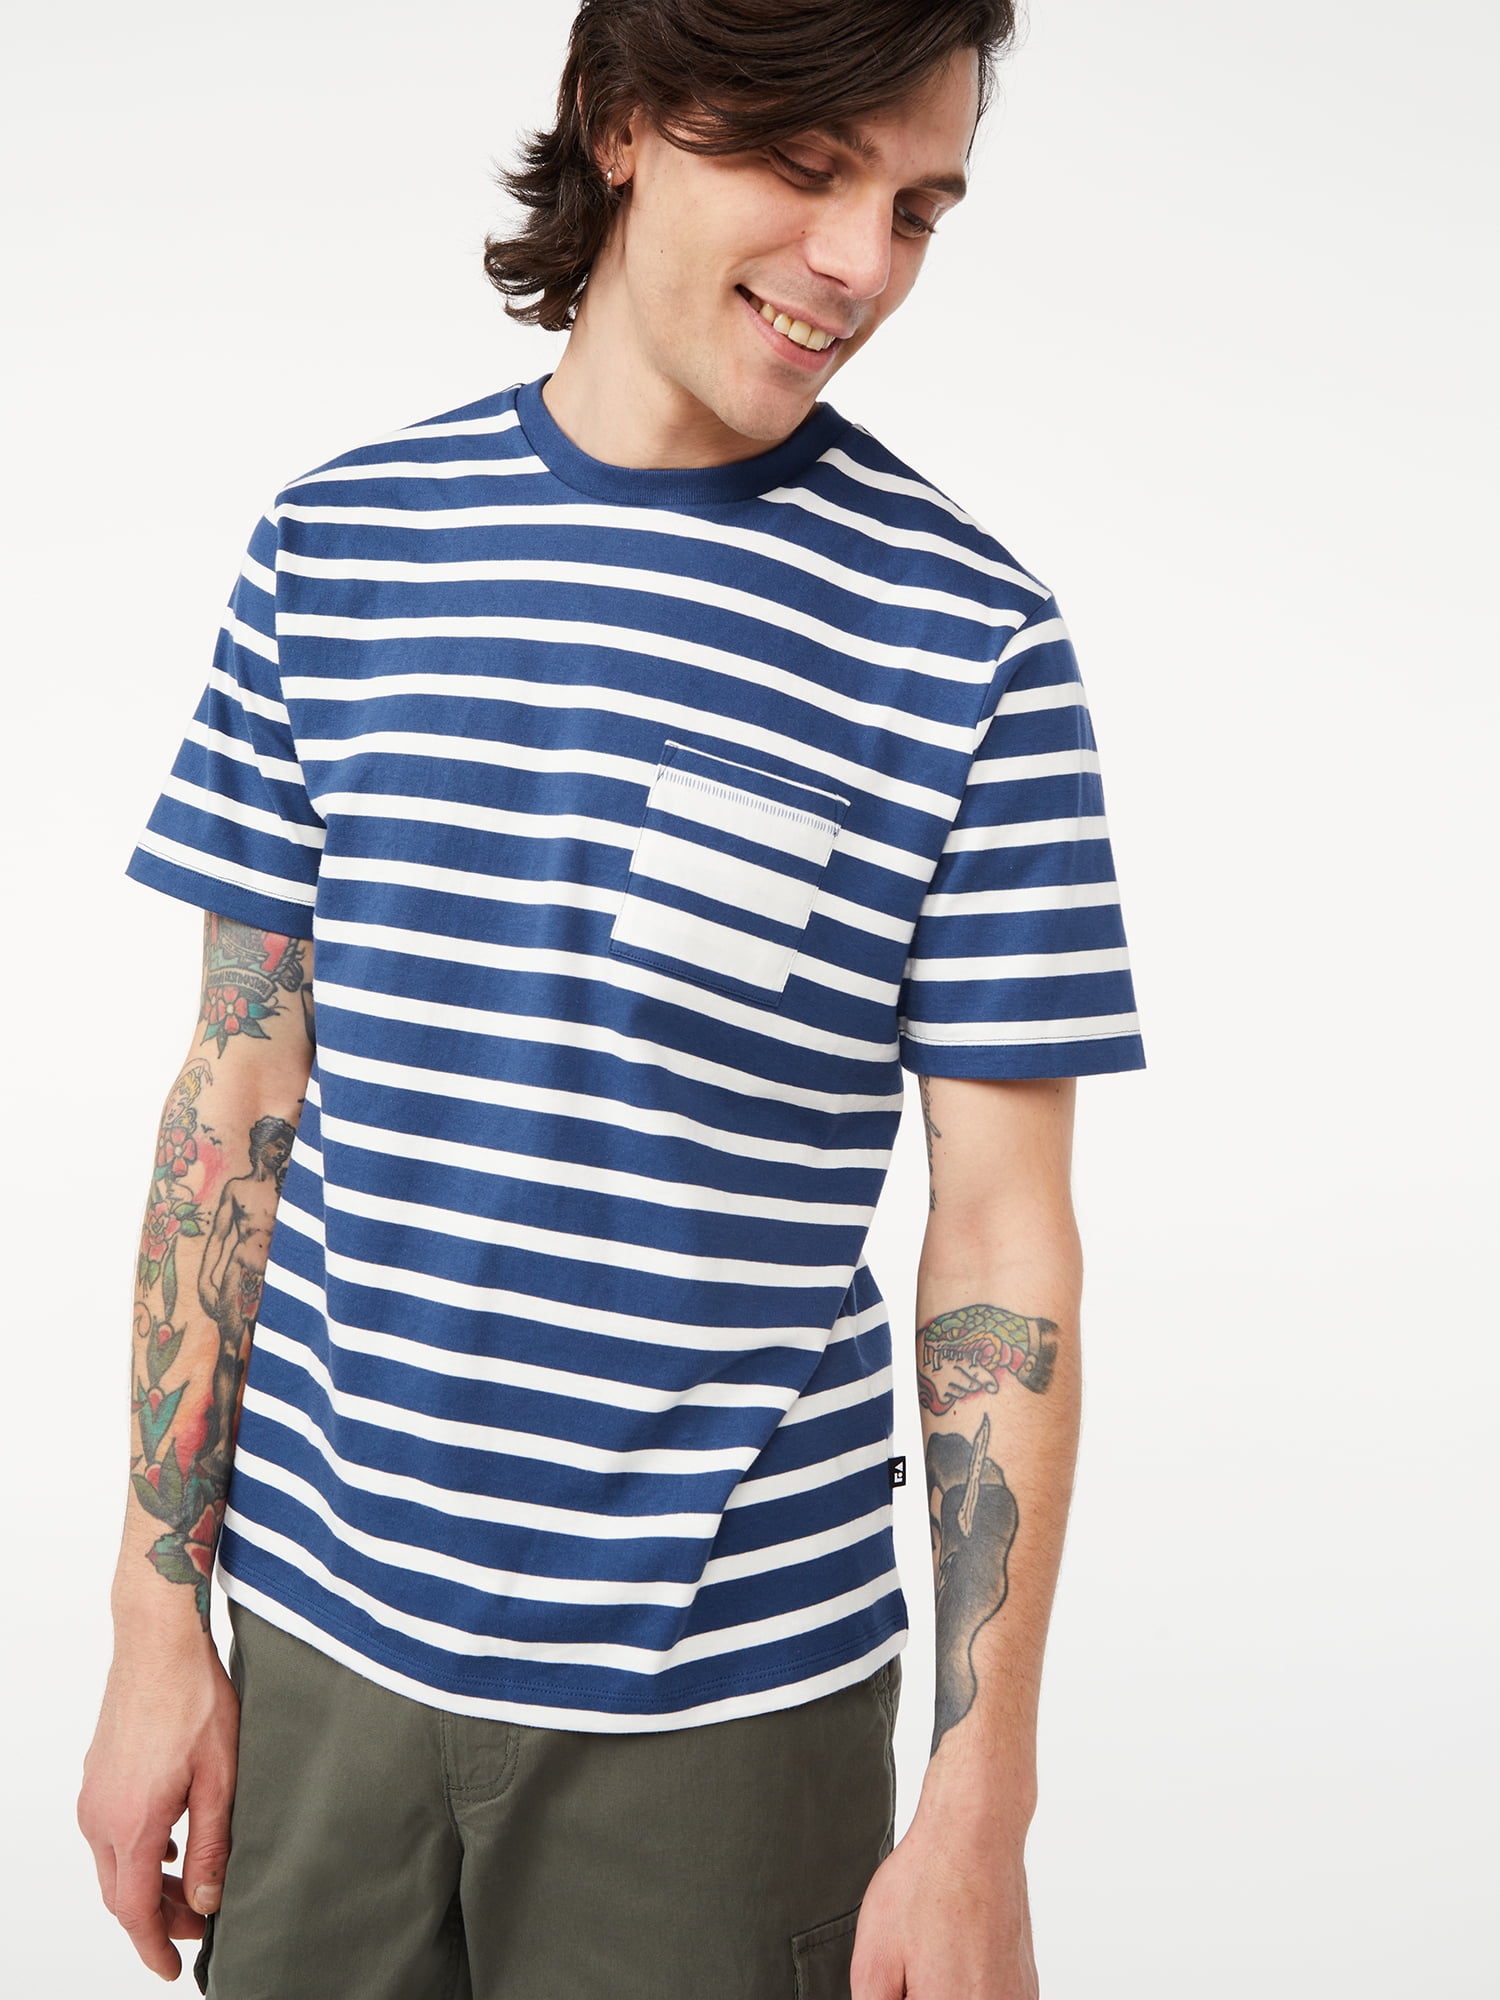 Free Assembly Men’s Striped Pocket T-Shirt – Home & Garden